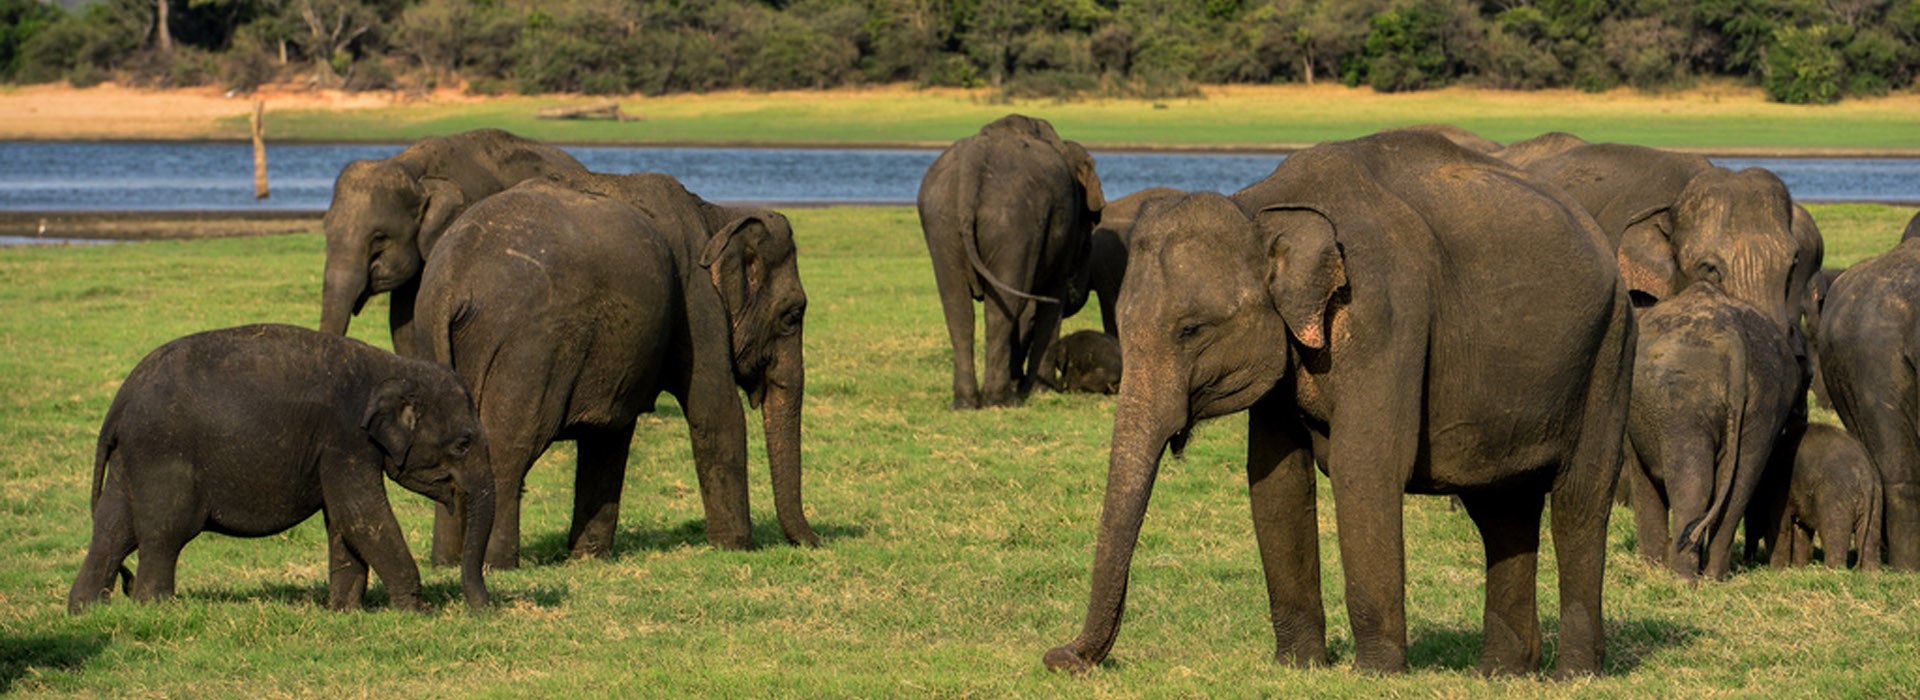 Visiter Le Parc National de Minneriya - Sri Lanka